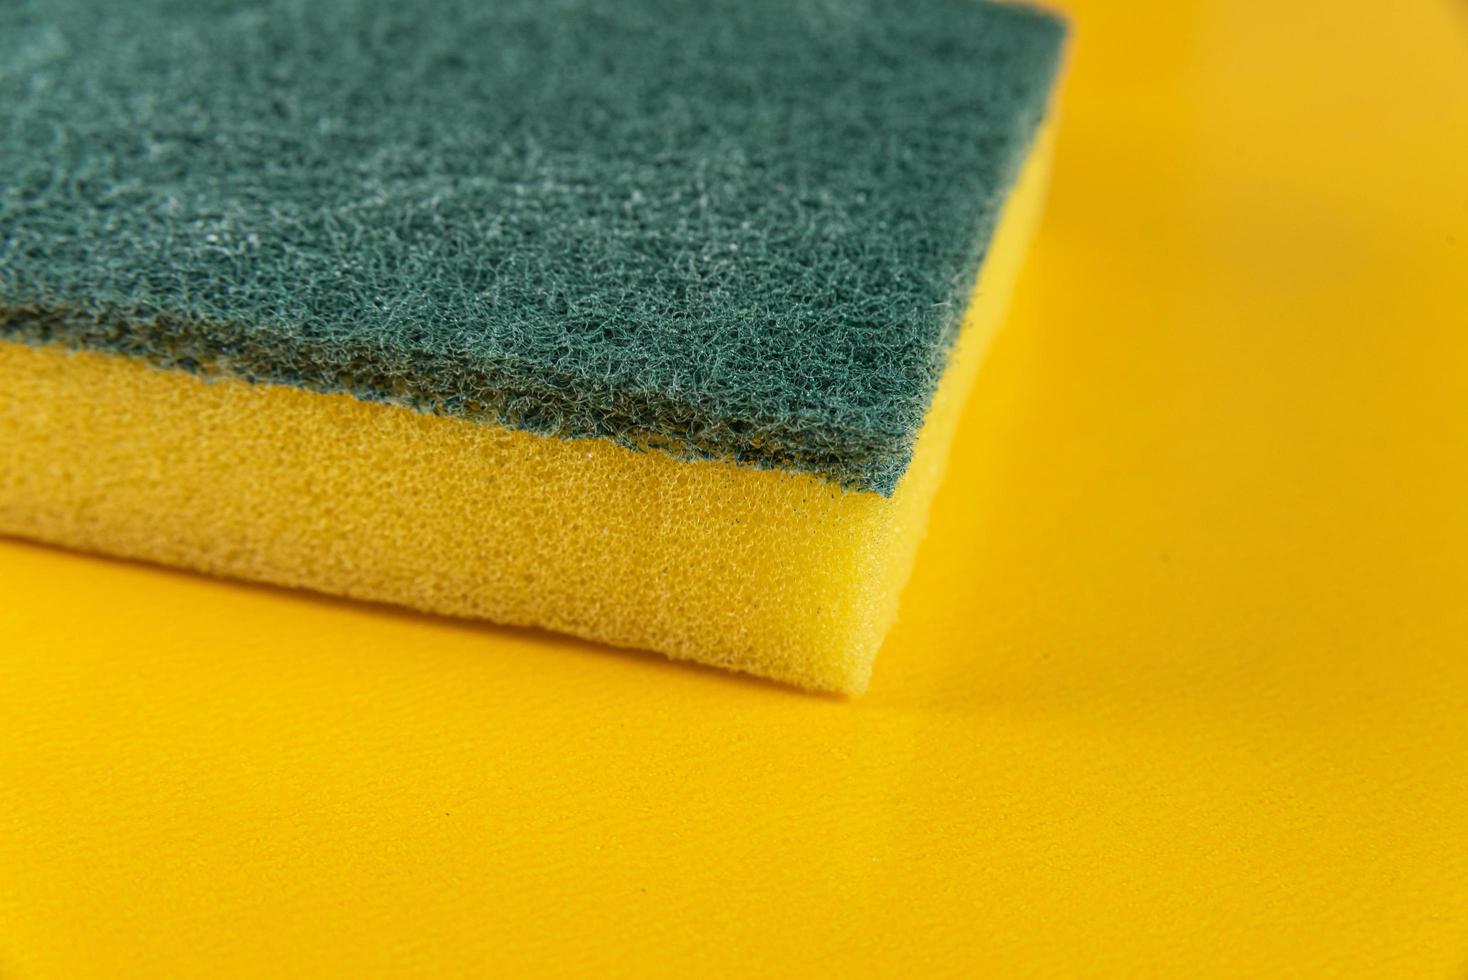 Kitchen sponge on the yellow background photo